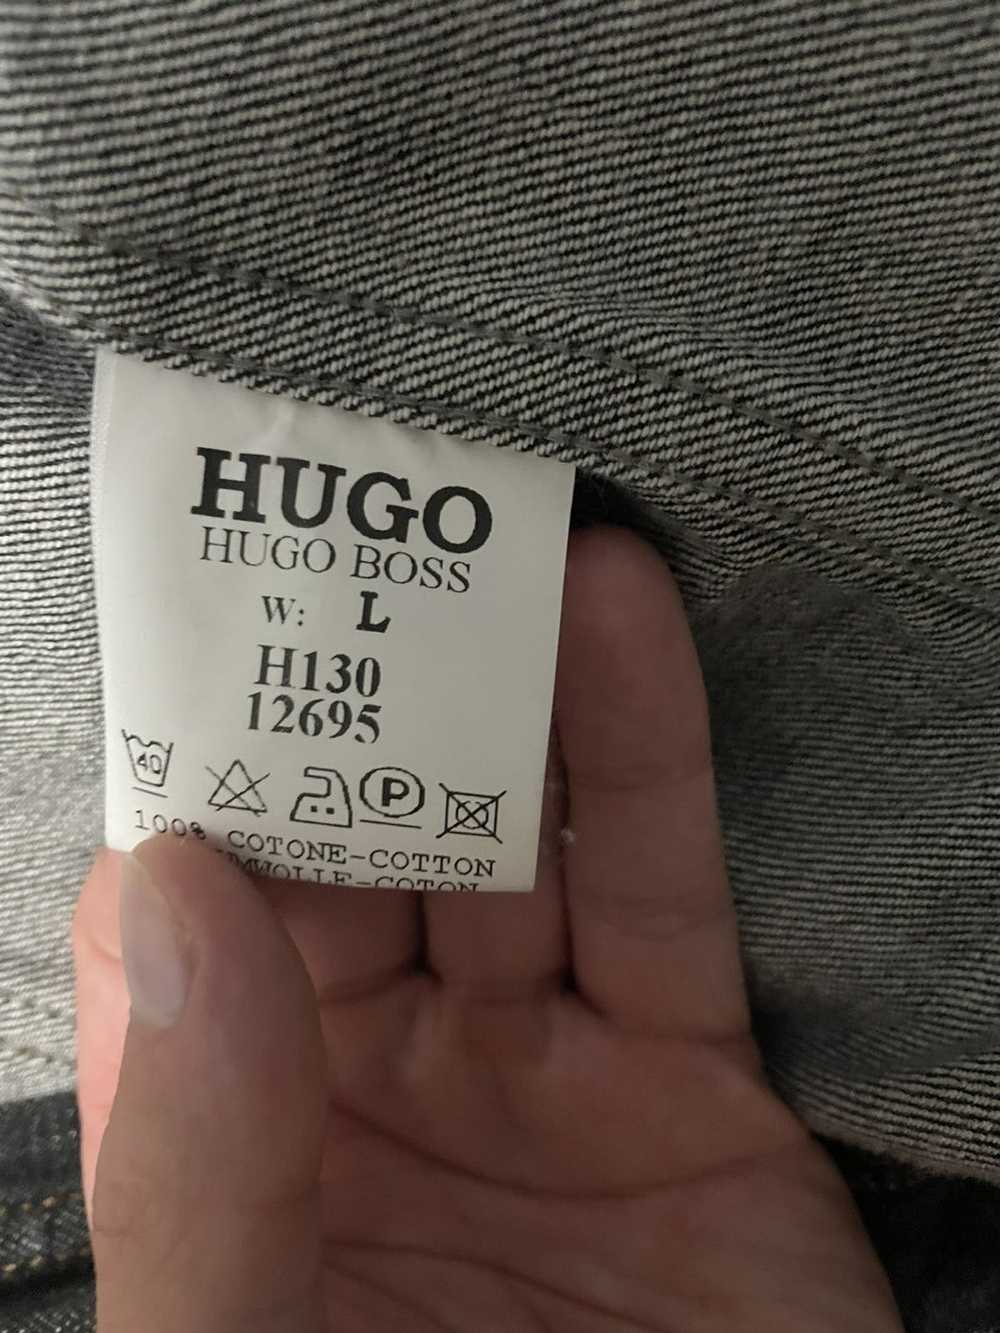 Hugo Boss Hugo boss denim jacket - image 3